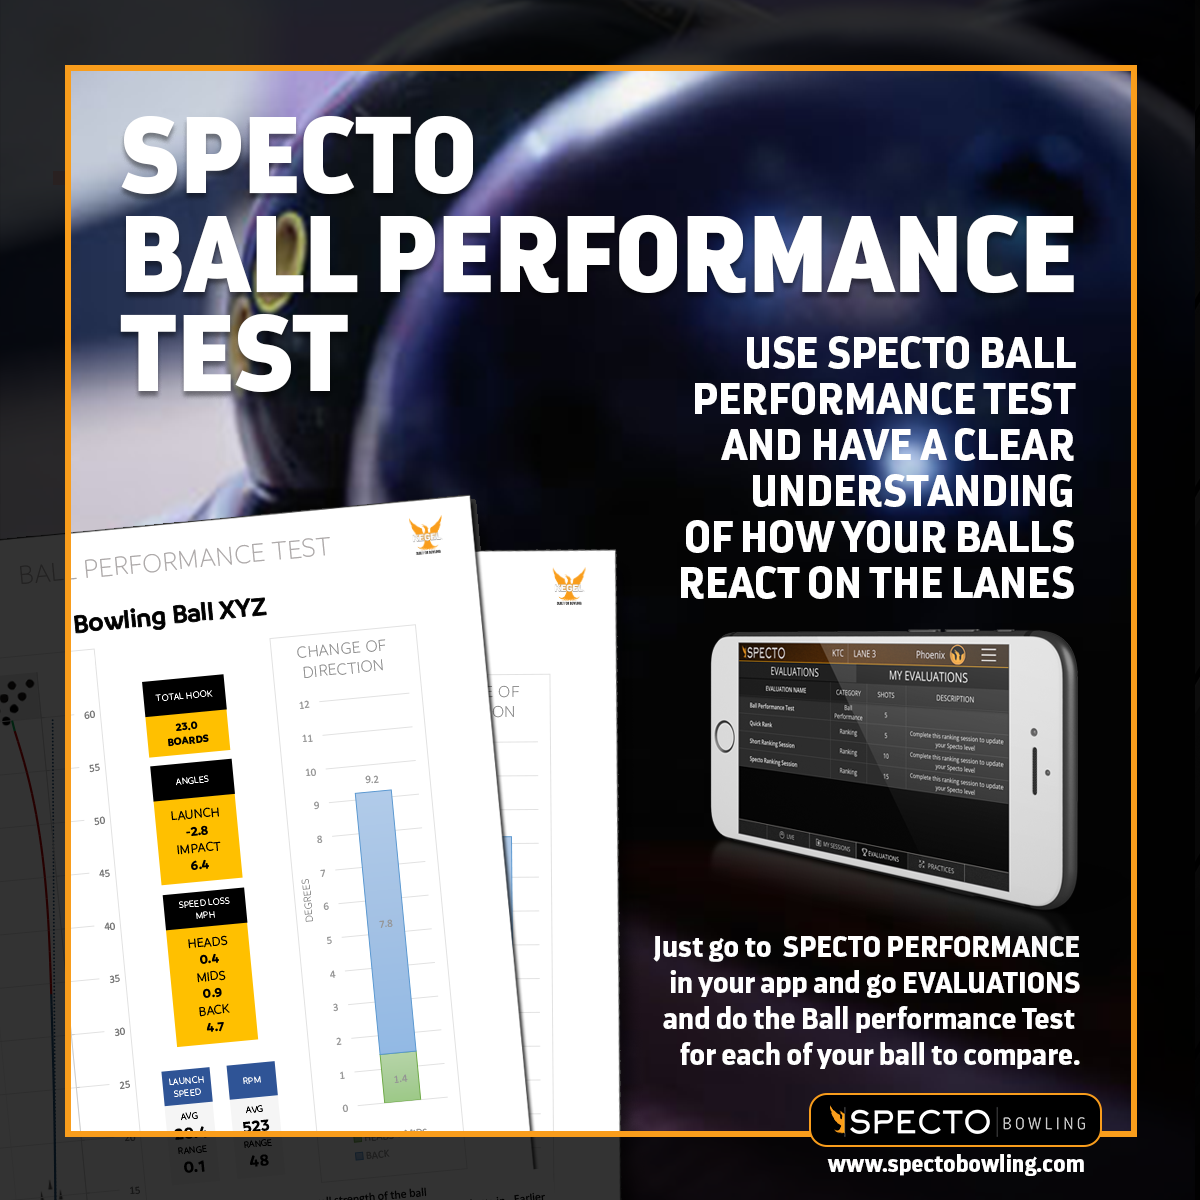 Specto ball performance test